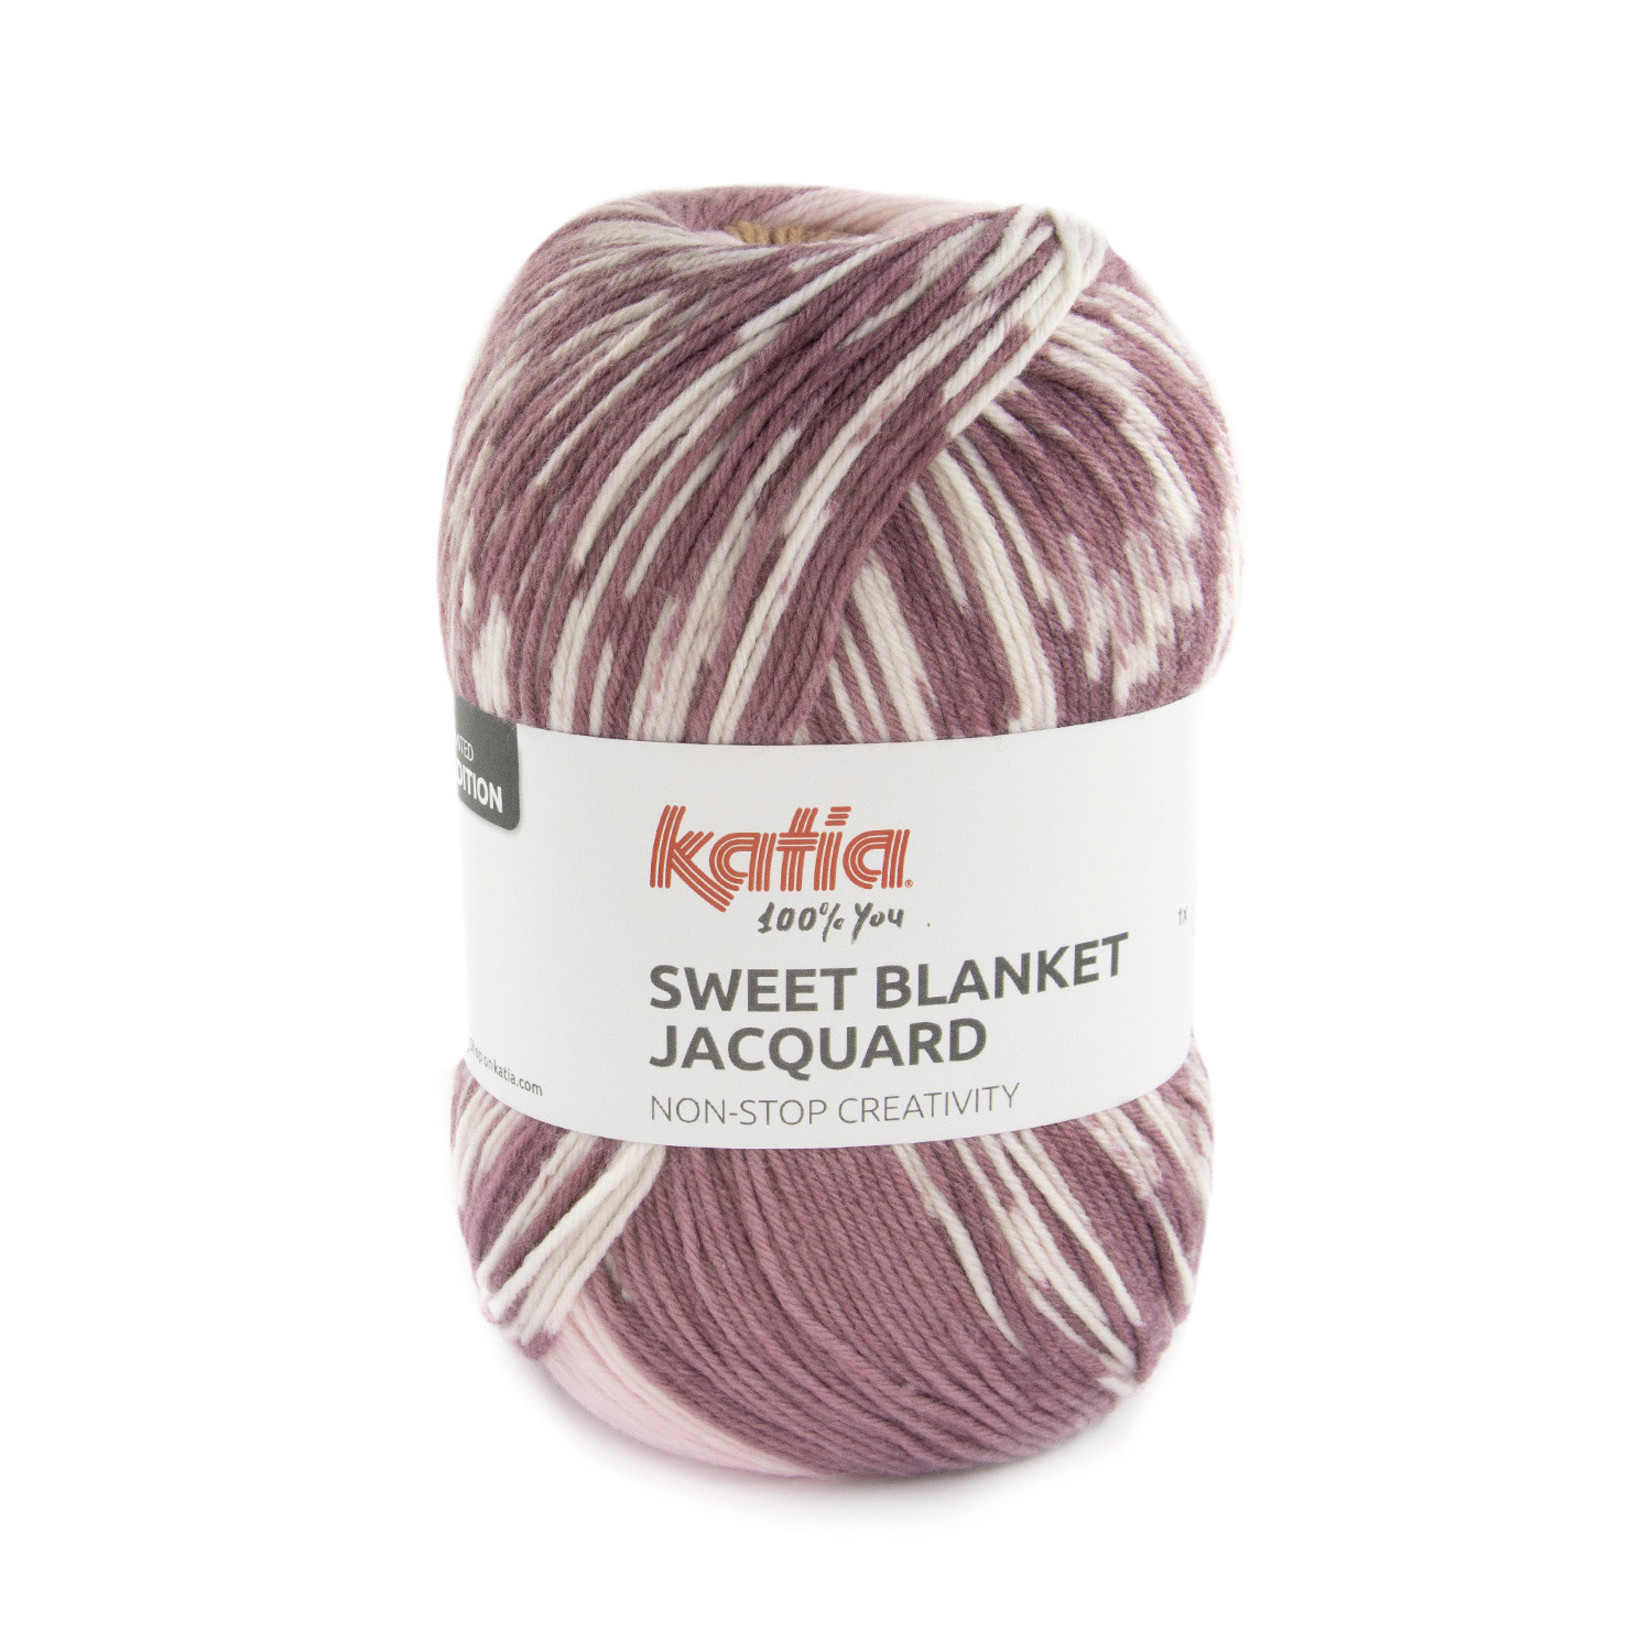 Katia Sweet Blanket Jacquard by Katia